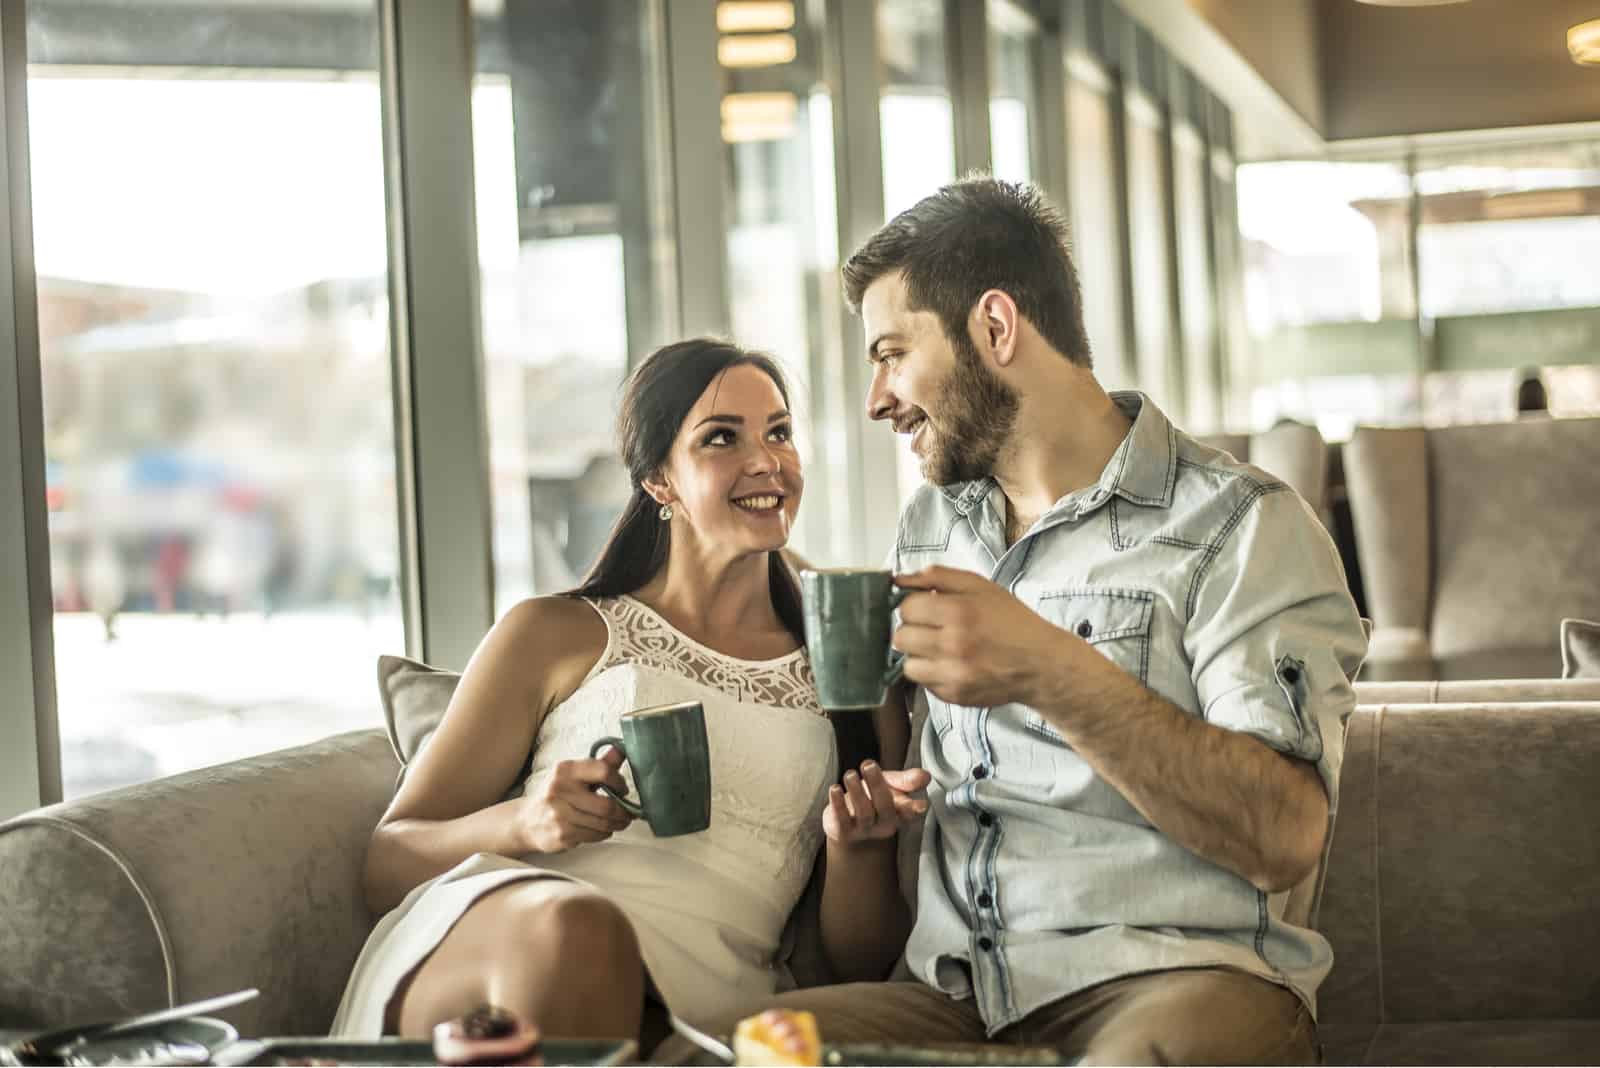 a smiling woman sits next to a man